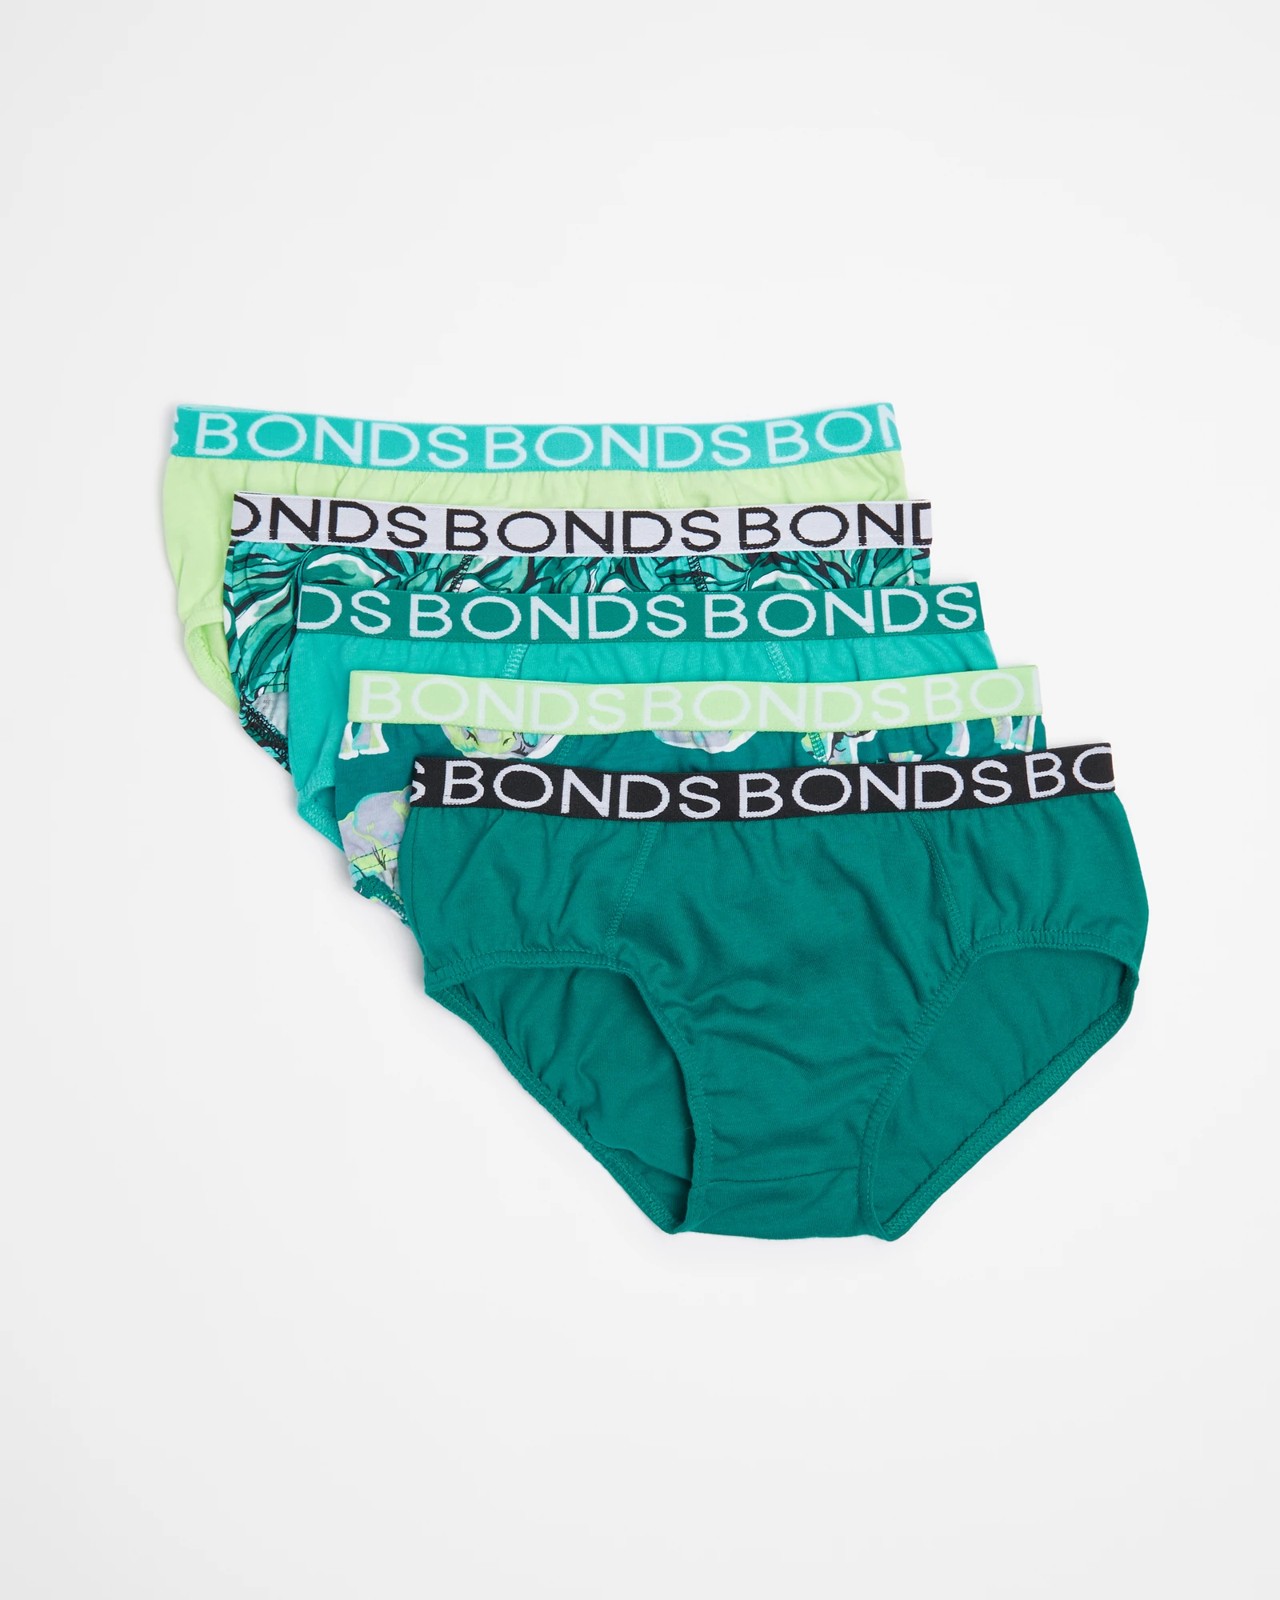 Bonds Boys Briefs 5 Pack - Green Multi Palm